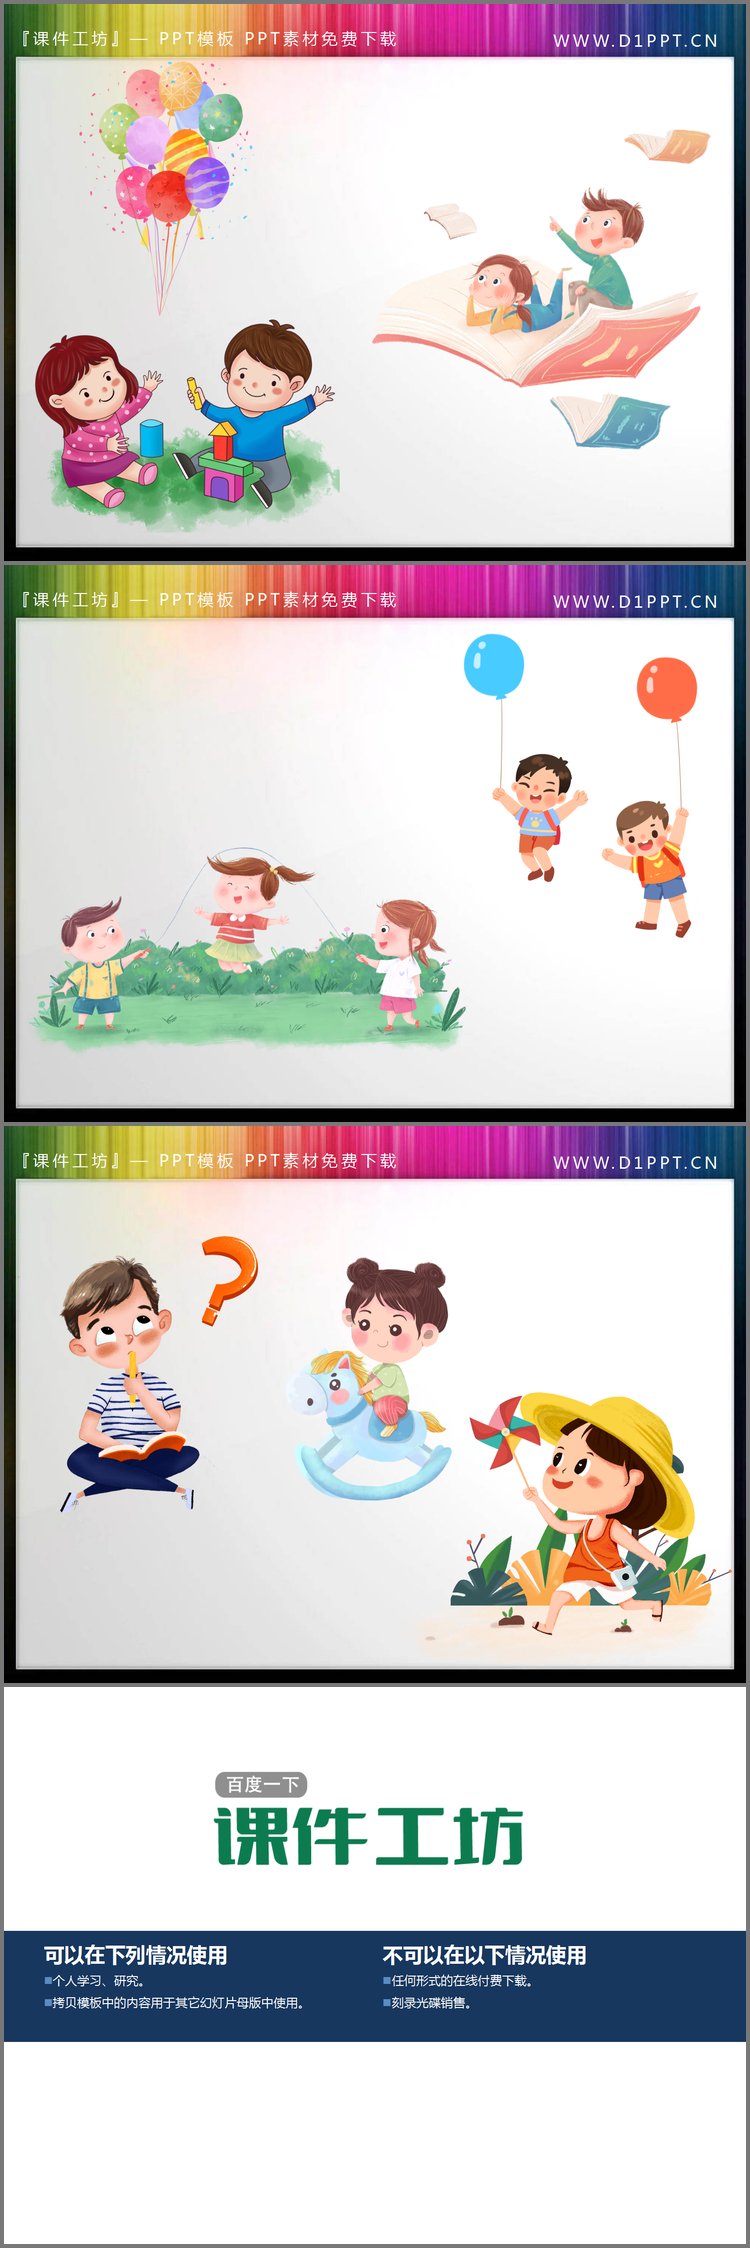 PPT模板-三组卡通儿童PPT素材